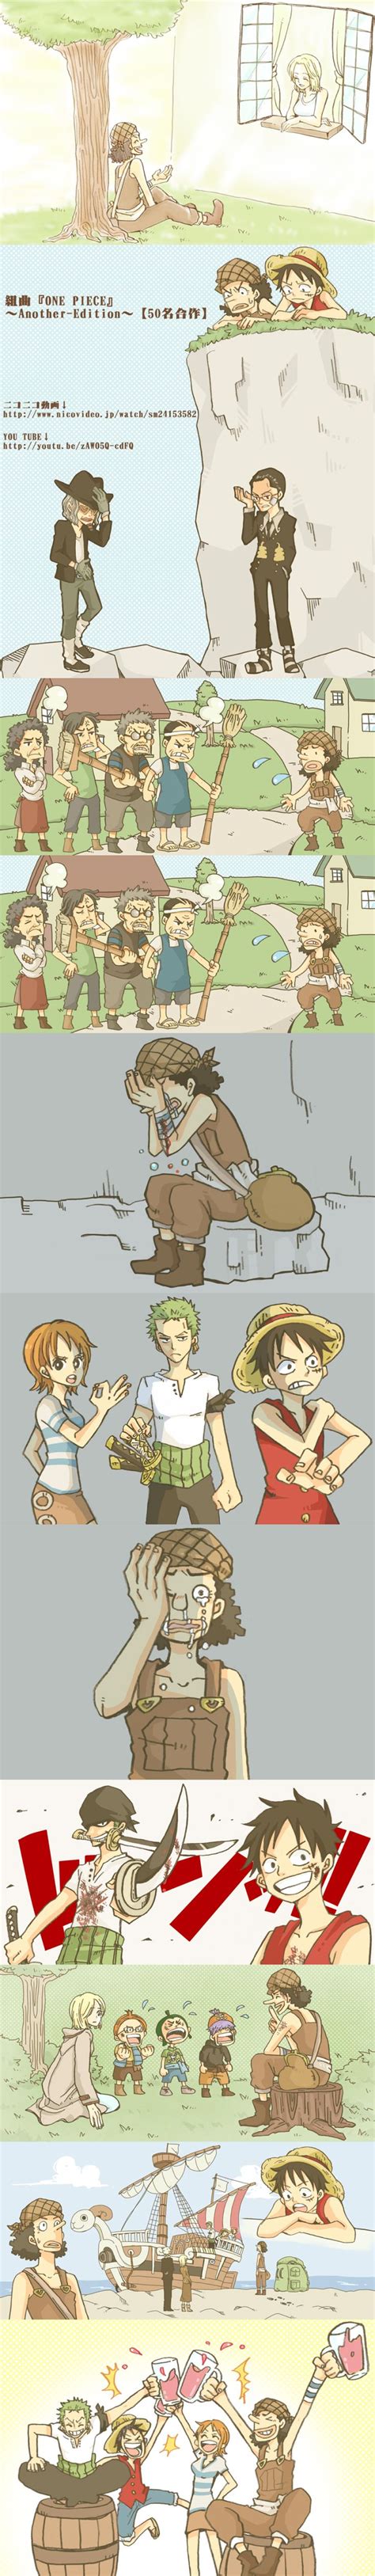 One Piece One Piece Pictures One Piece Meme One Piece Anime